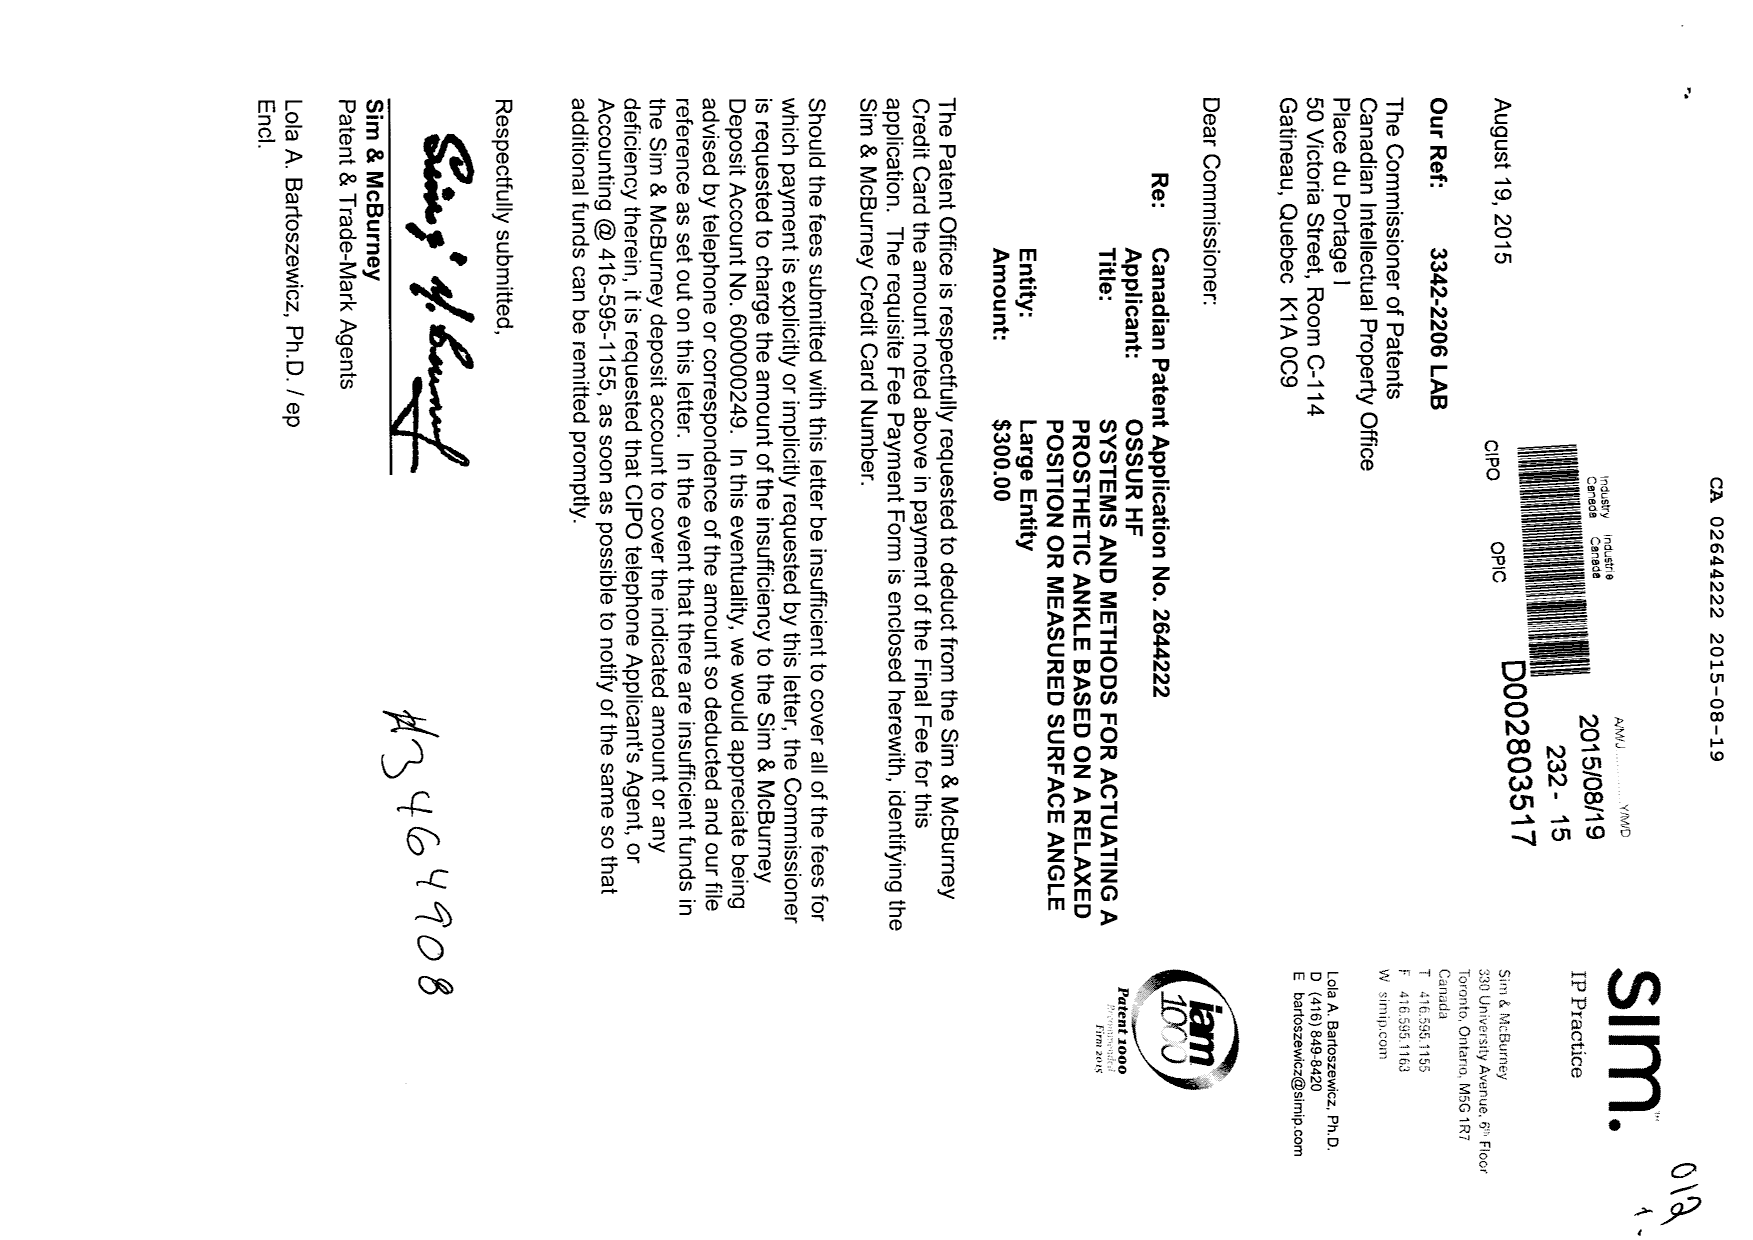 Canadian Patent Document 2644222. Correspondence 20141219. Image 1 of 1